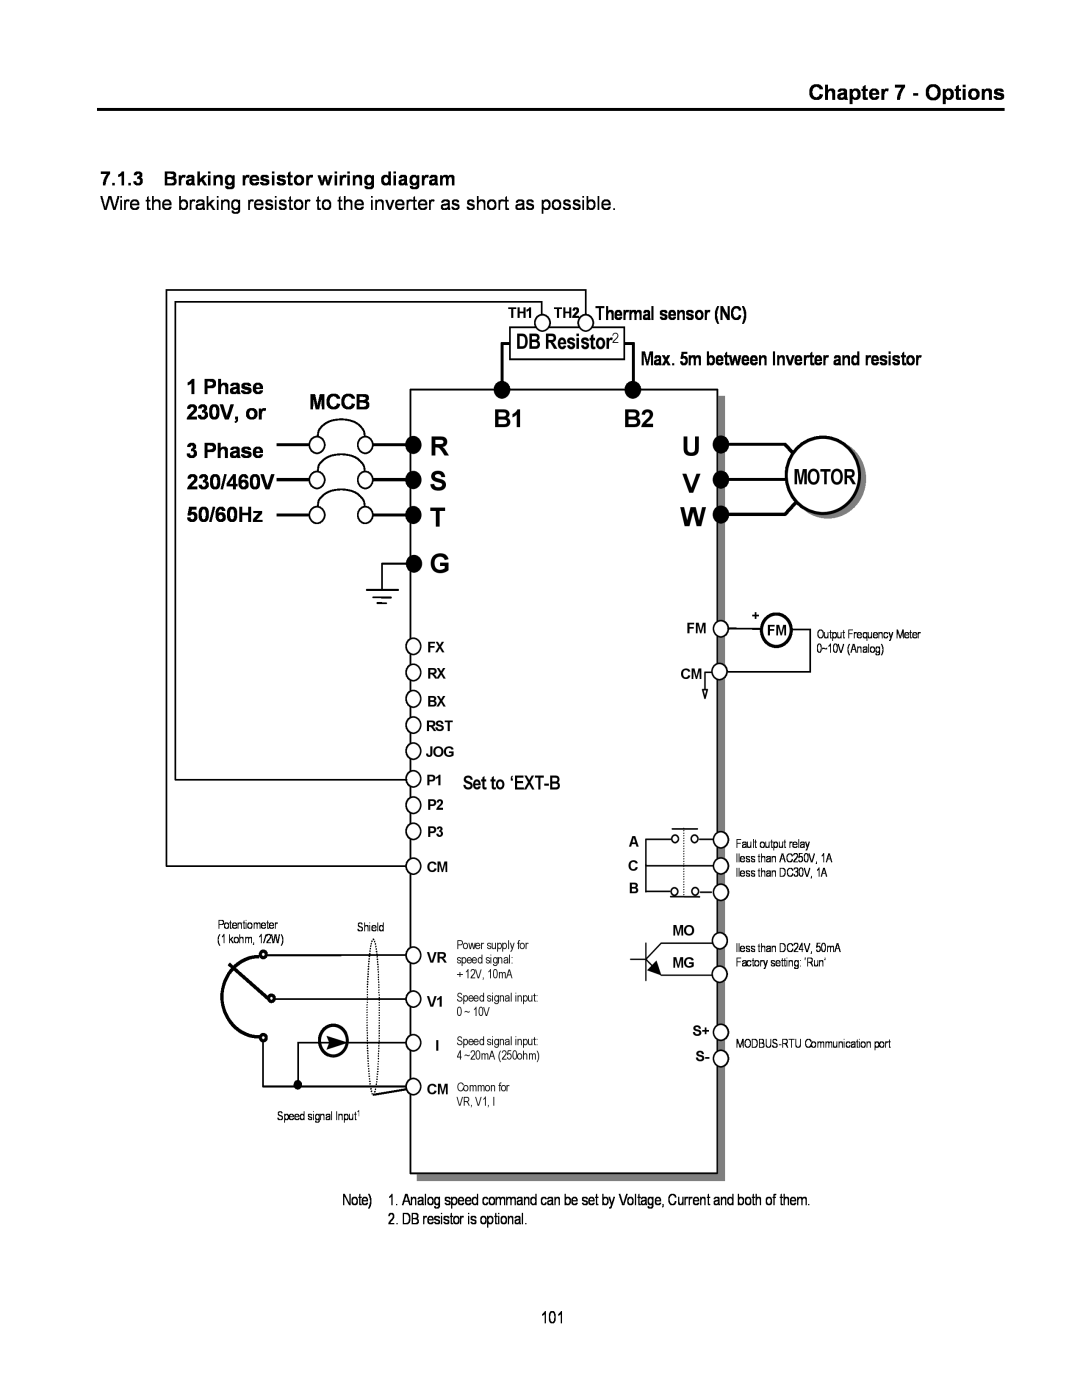 Cleveland Range inverter manual Options, DB Resistor2, Phase, Mccb, 230V, or, 230/460V, 50/60Hz, Motor 